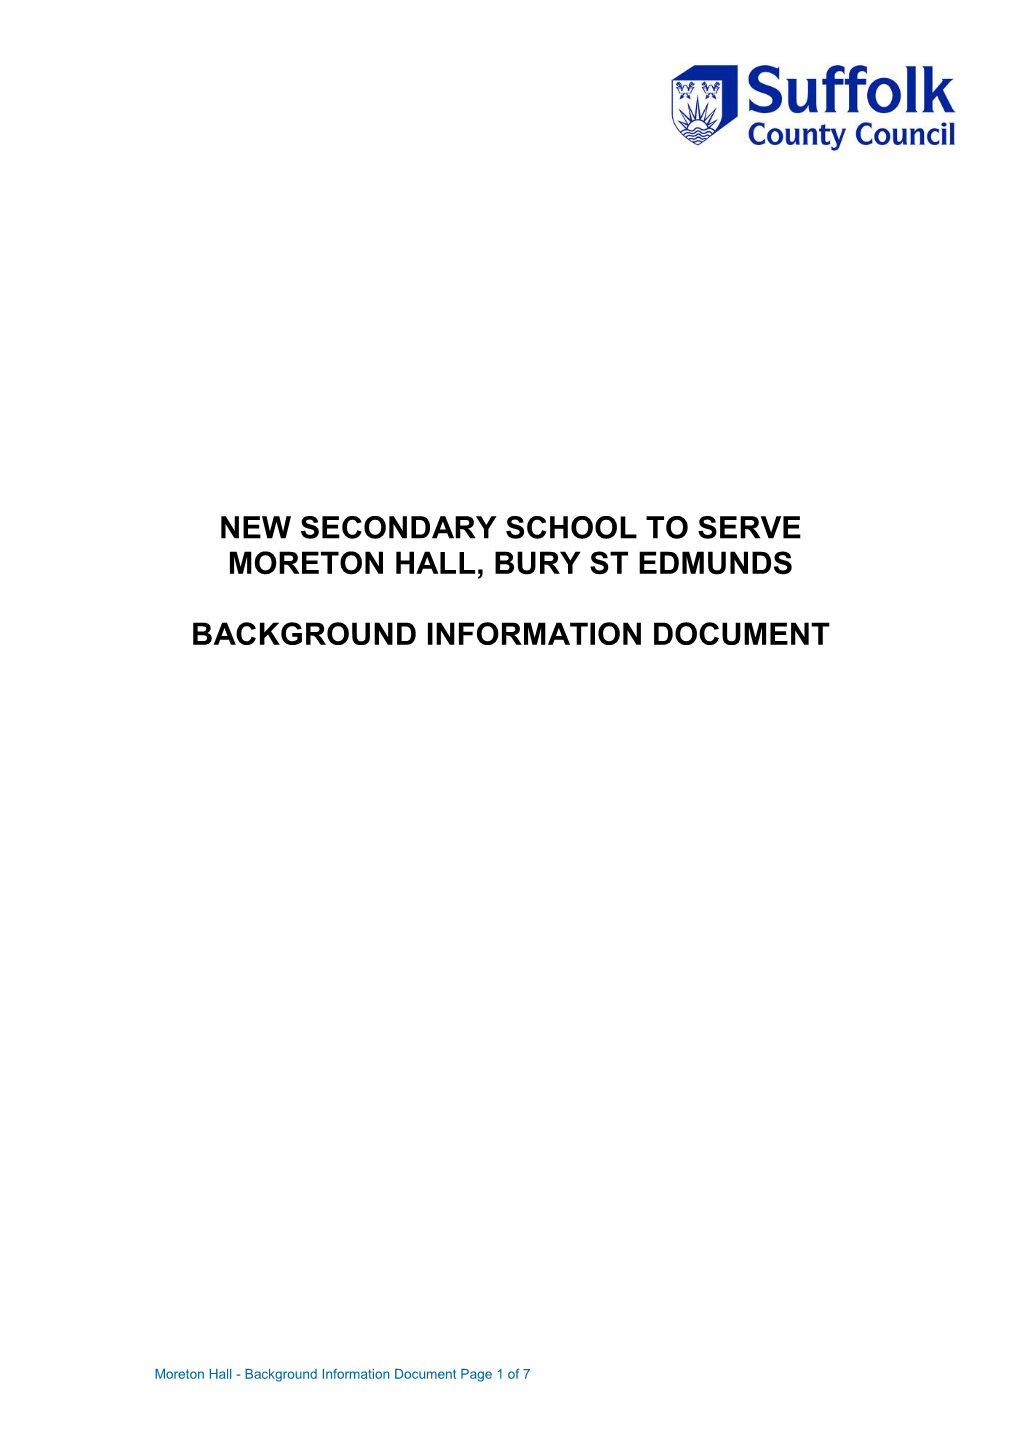 New Secondary School to Serve Moreton Hall, Bury St Edmunds Background Information Document